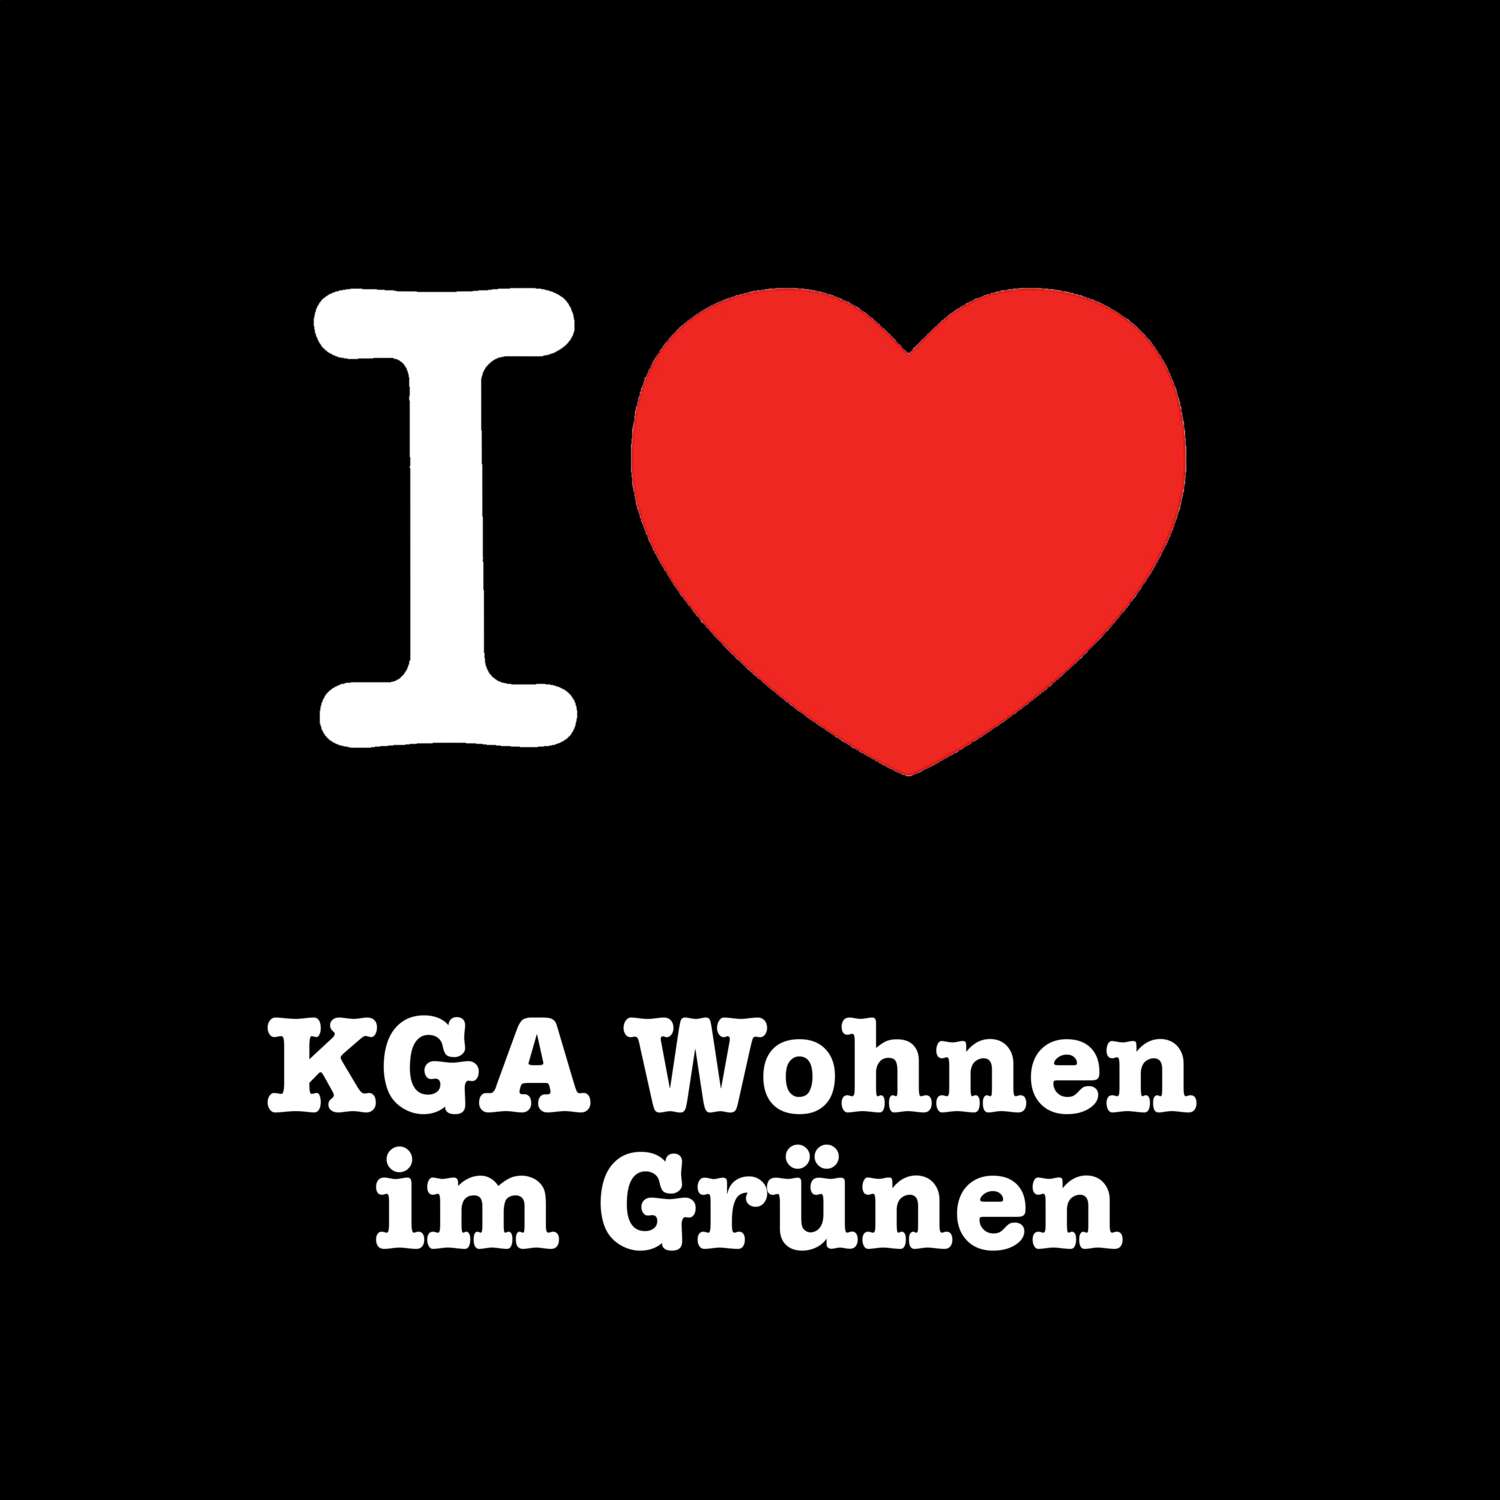 KGA Wohnen im Grünen T-Shirt »I love«